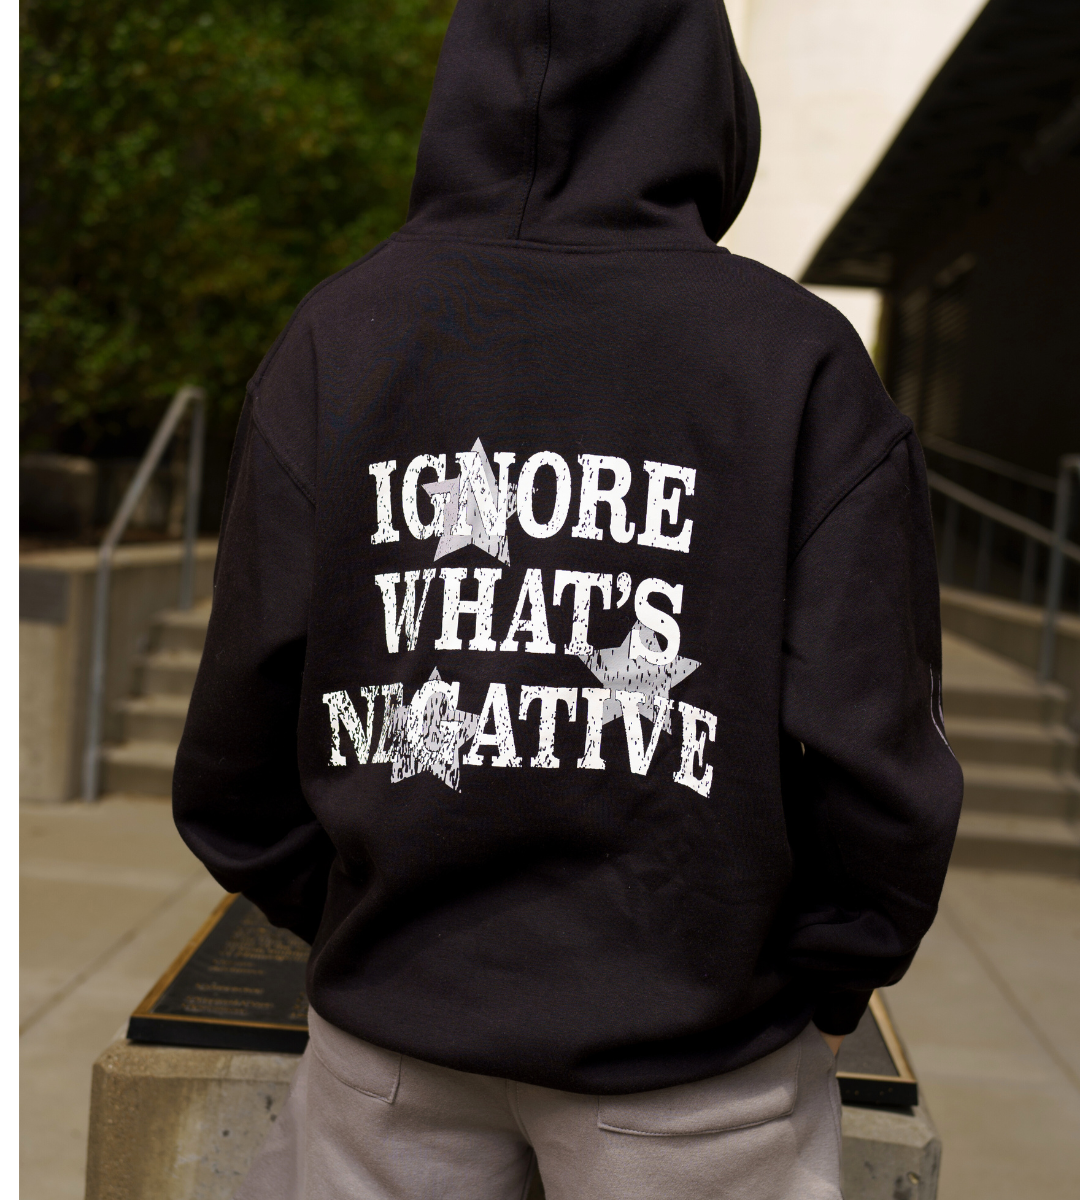 Ignore What's Negative Hoodie [Black]